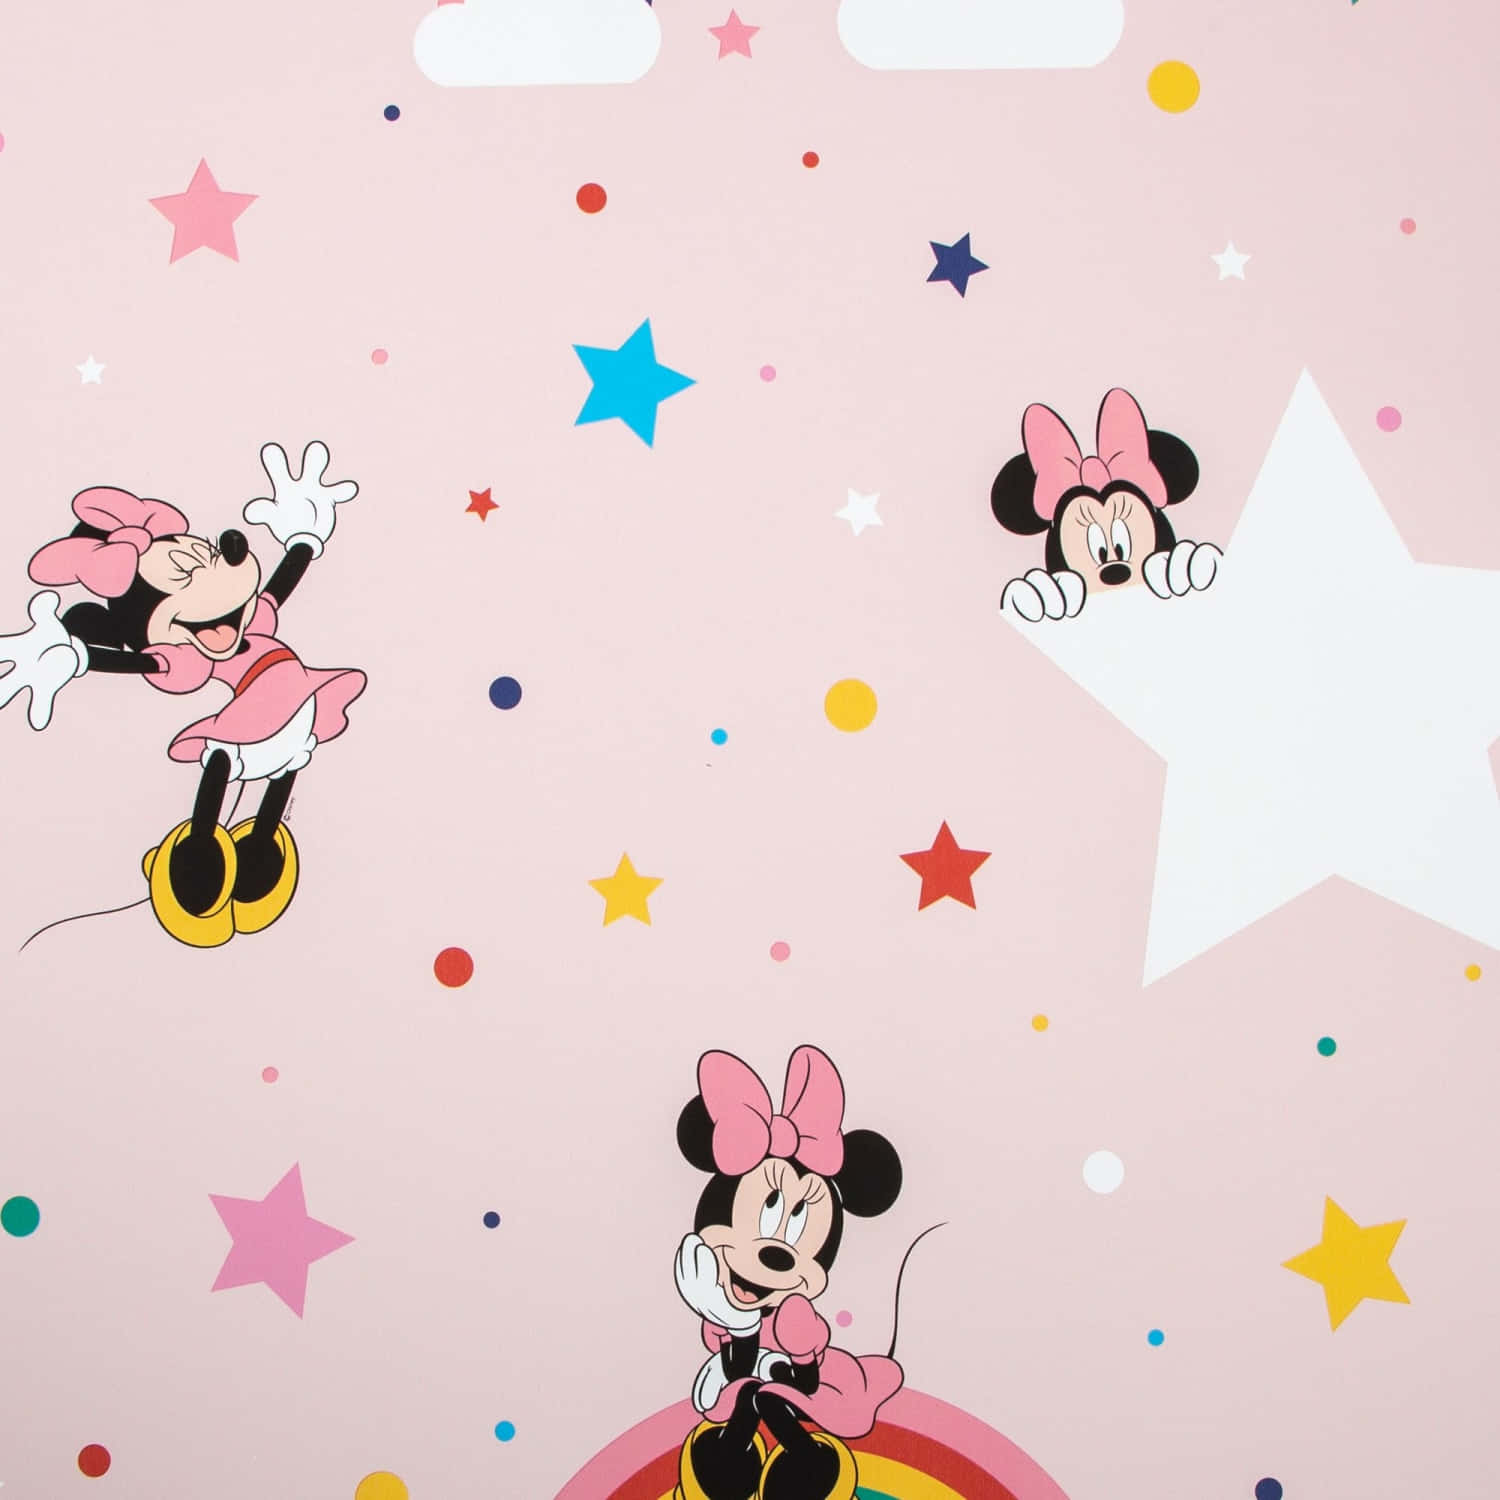 Minnie Mouse ready to make dreams come true. Wallpaper